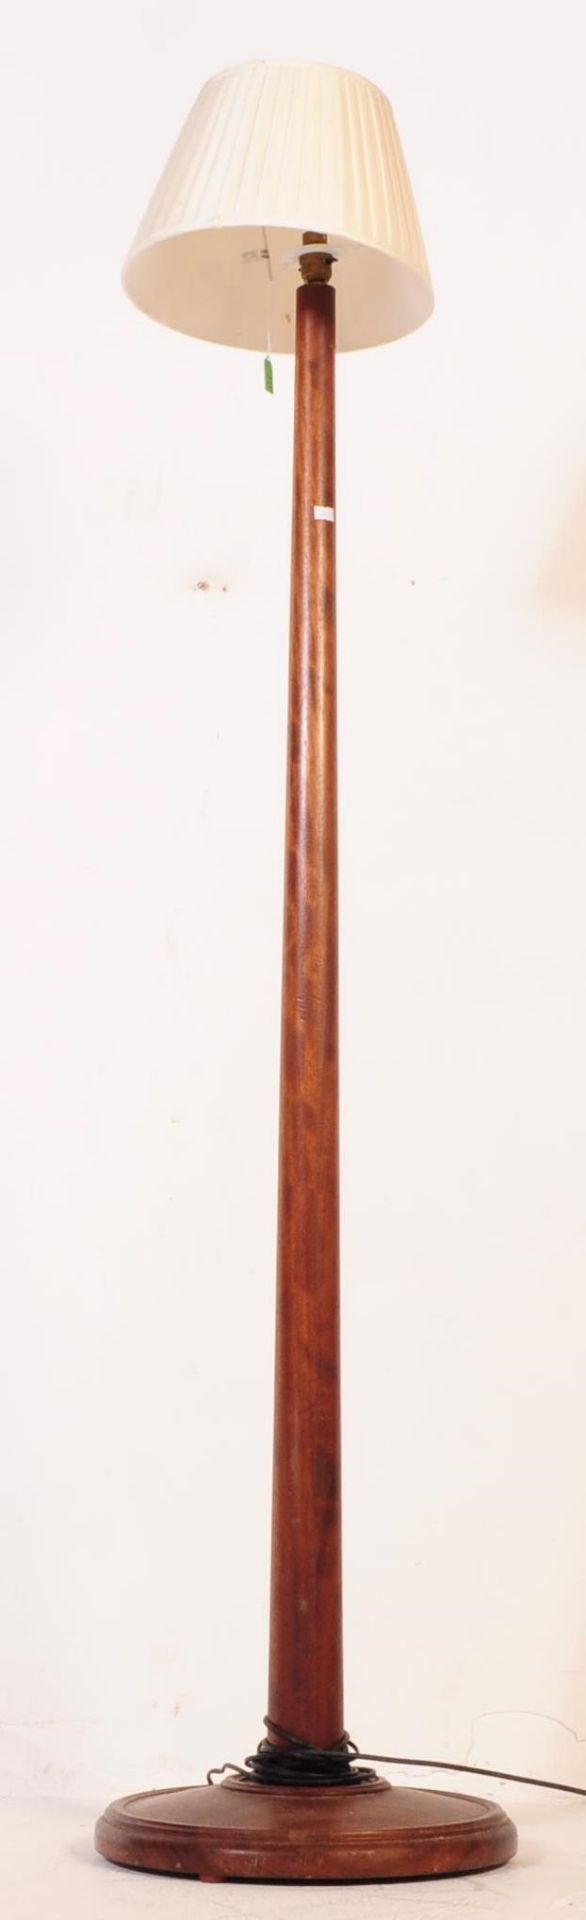 19TH CENTURY VICTORIAN MAHOGANY STANDARD LAMP - Image 2 of 6